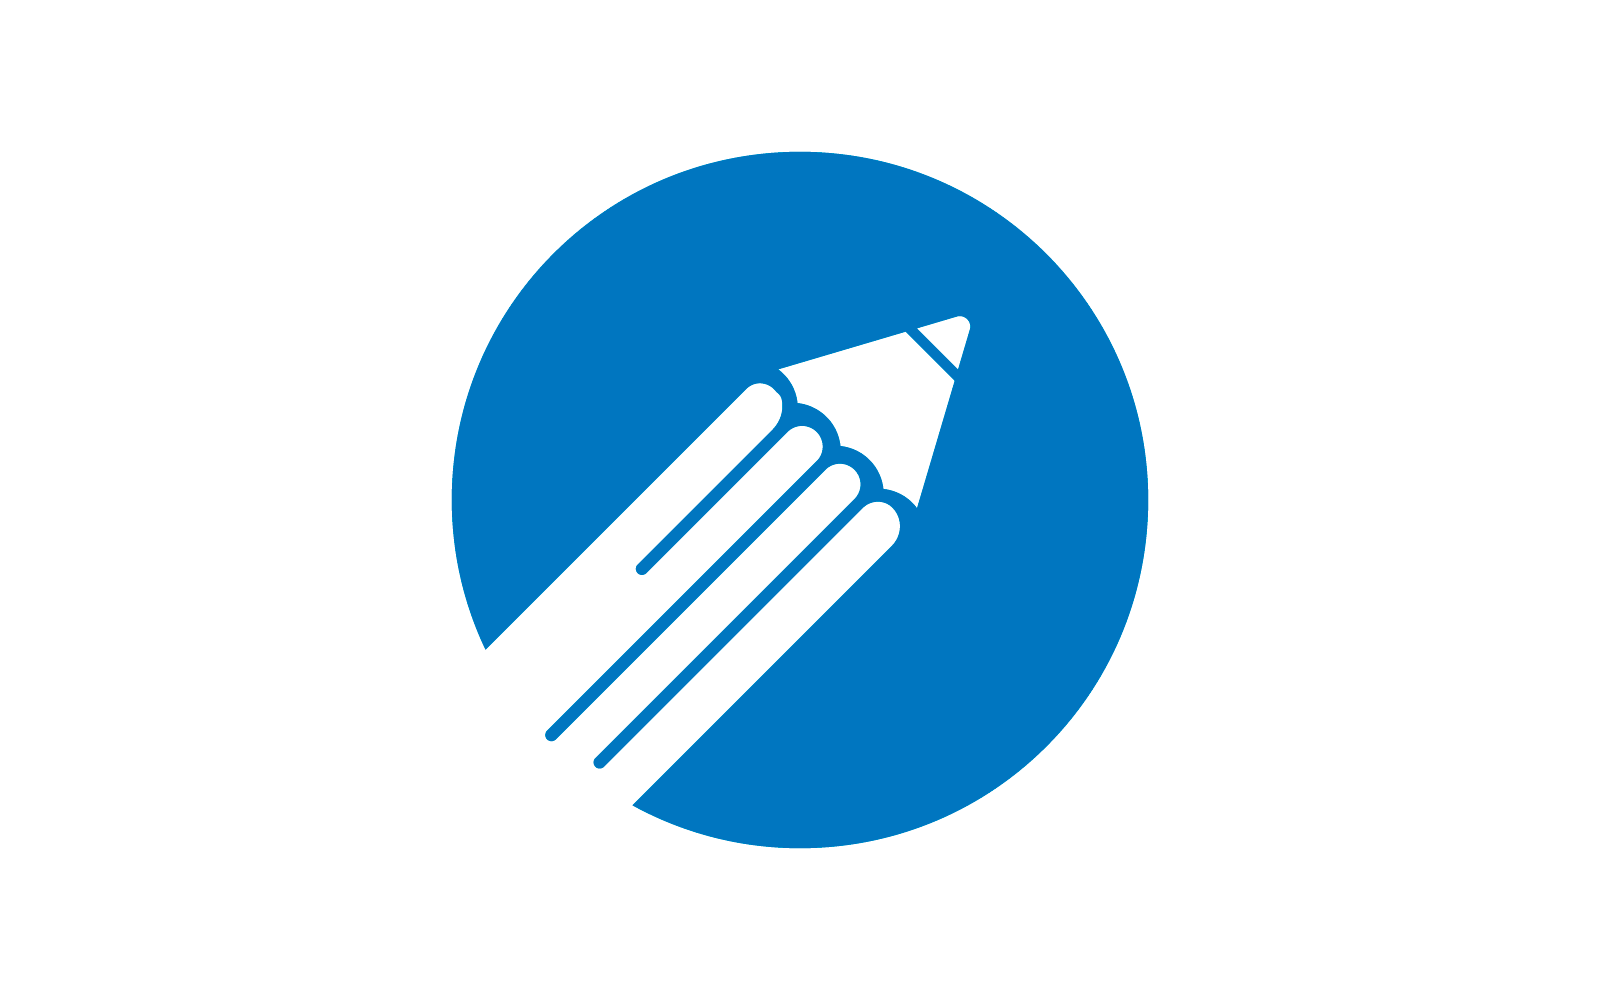 Pencil logo illustration vector flat design